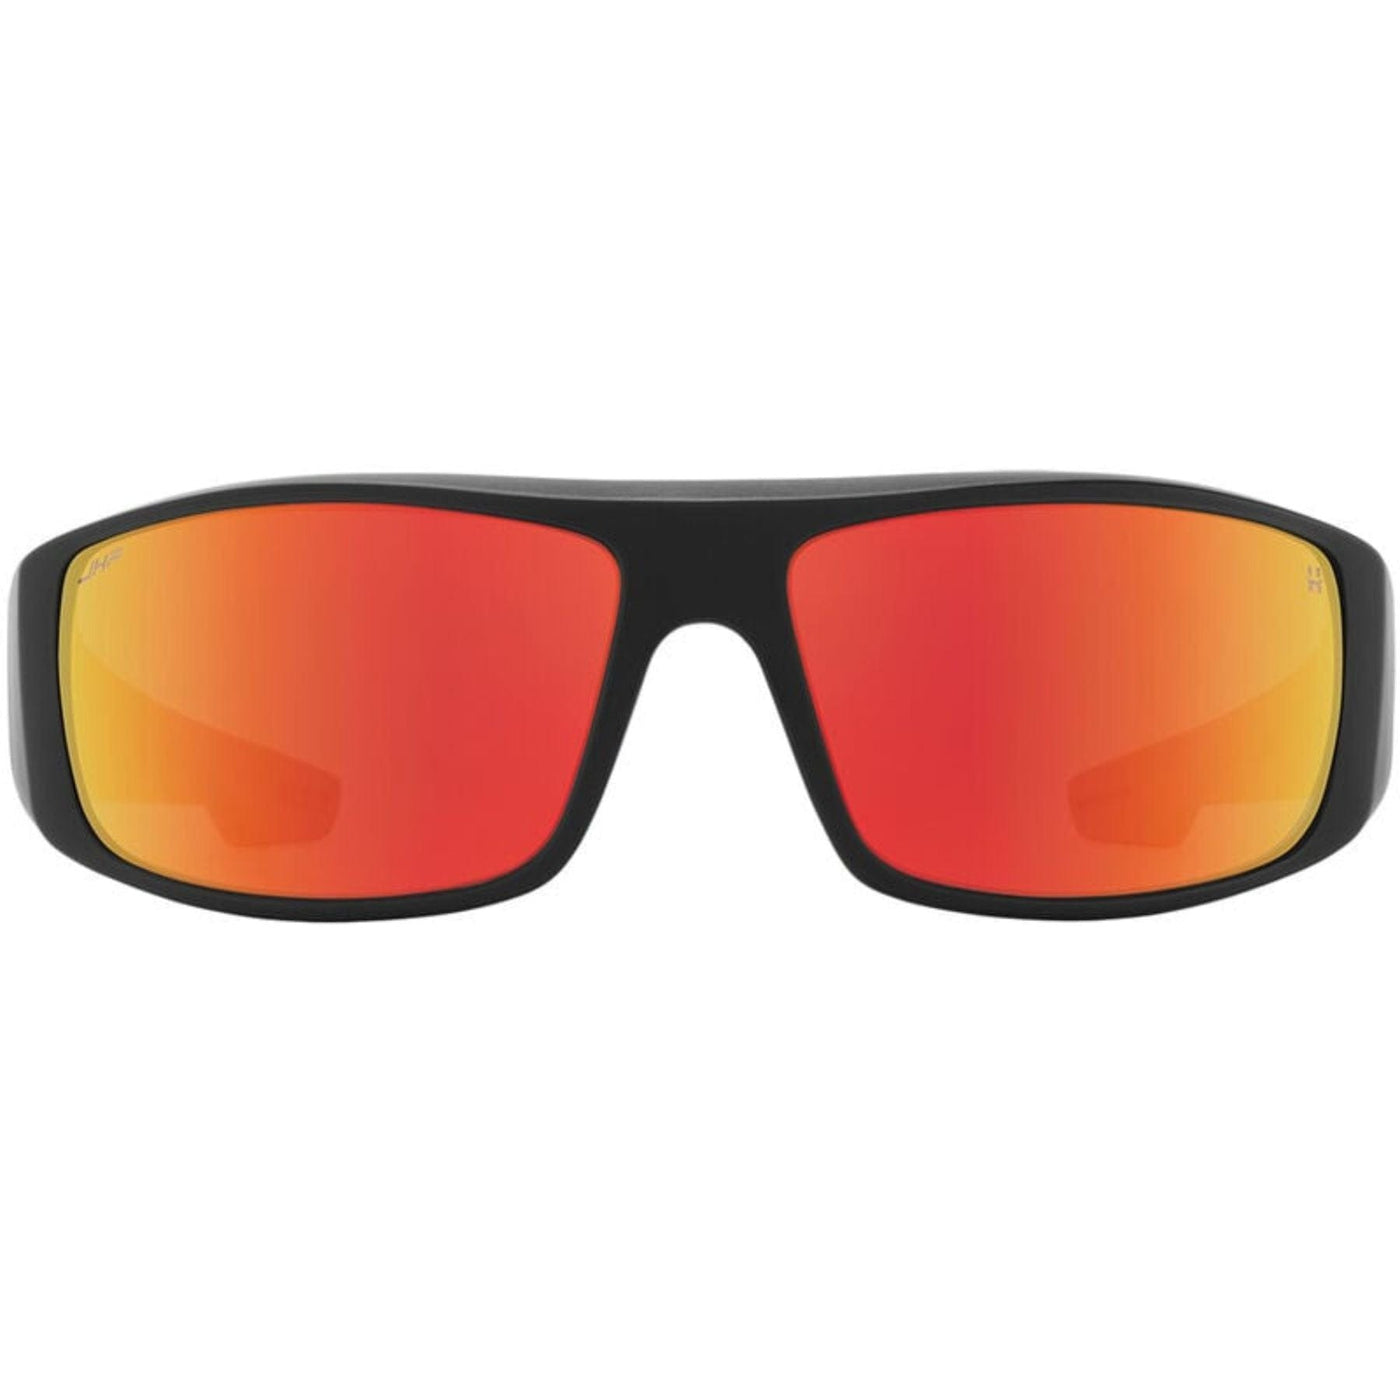 SPY LOGAN Boo Johnson Sunglasses, Happy Lens - Red 8Lines Shop - Fast Shipping